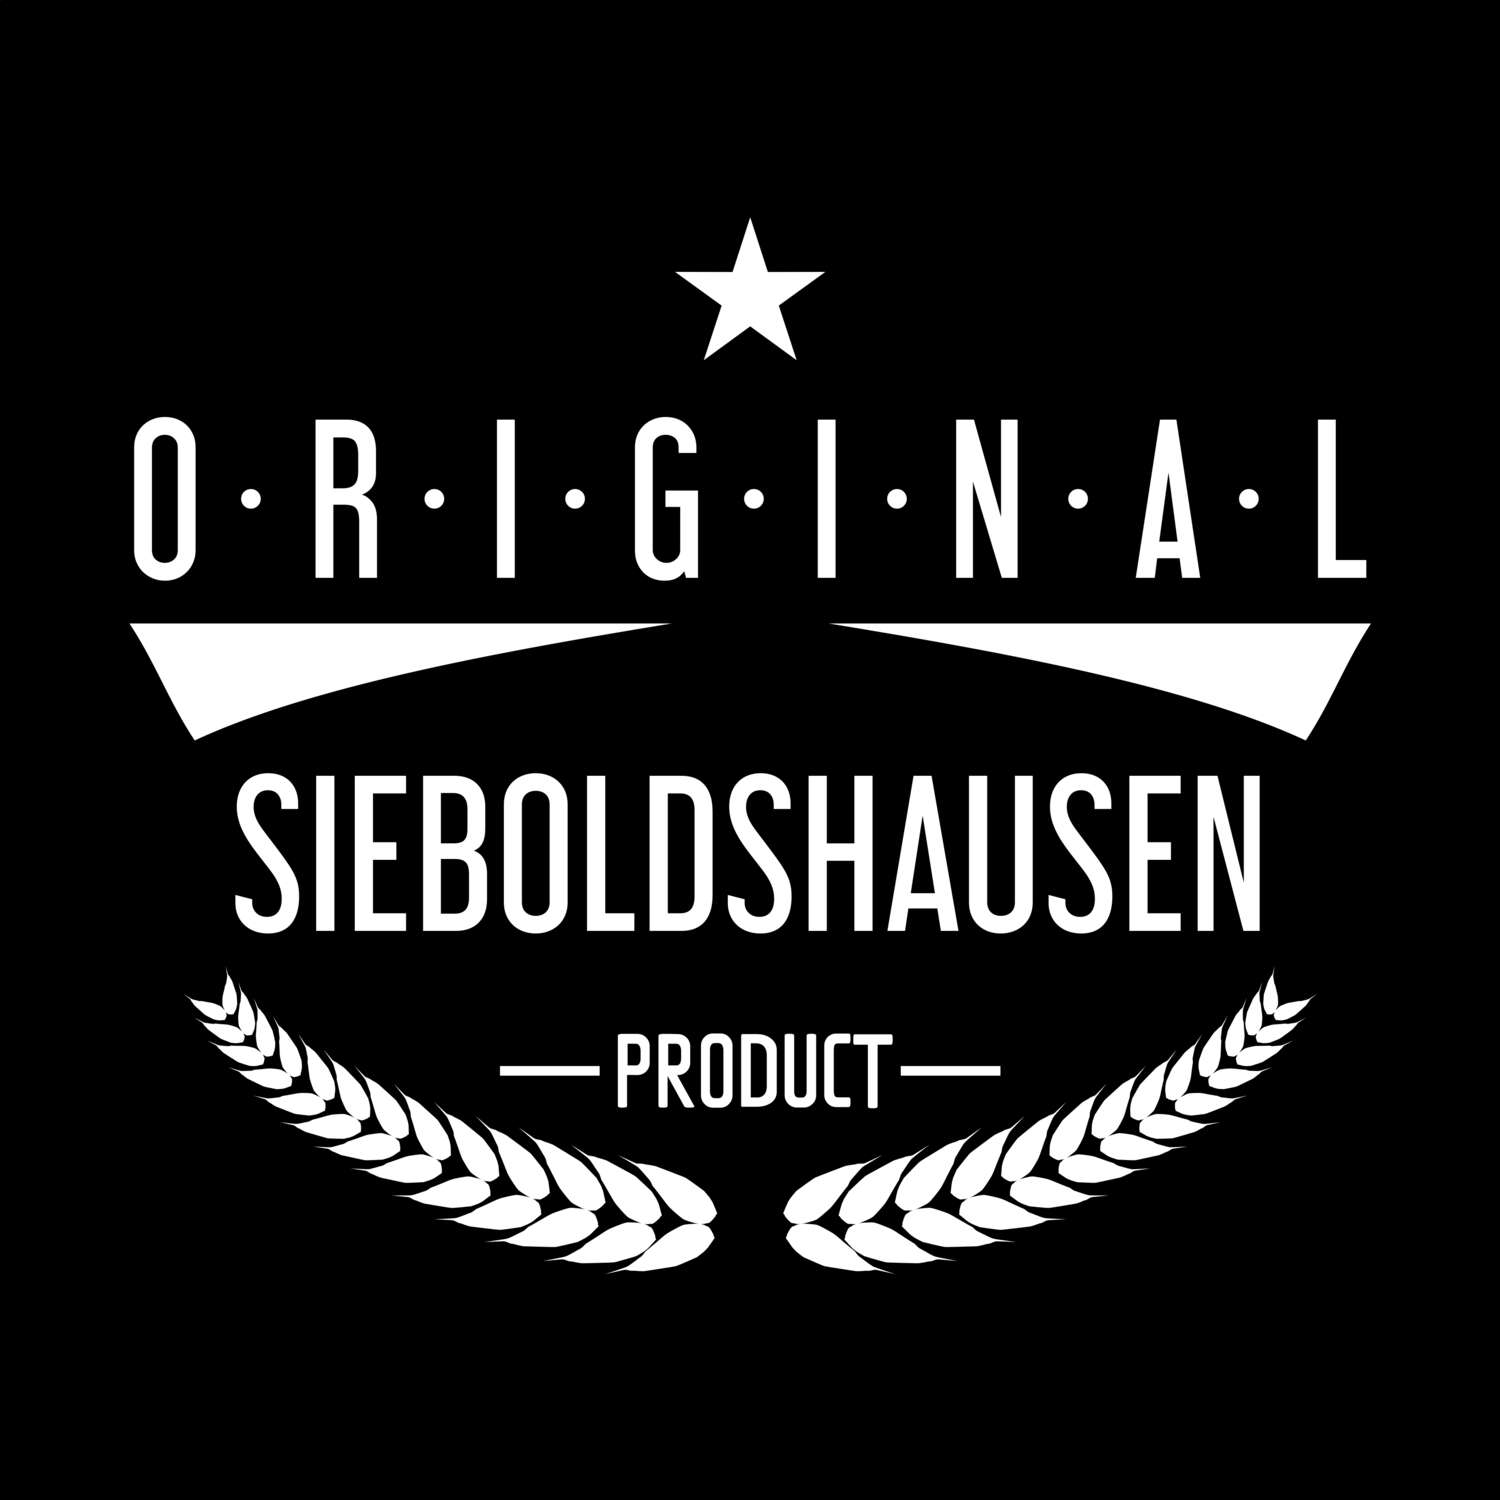 Sieboldshausen T-Shirt »Original Product«